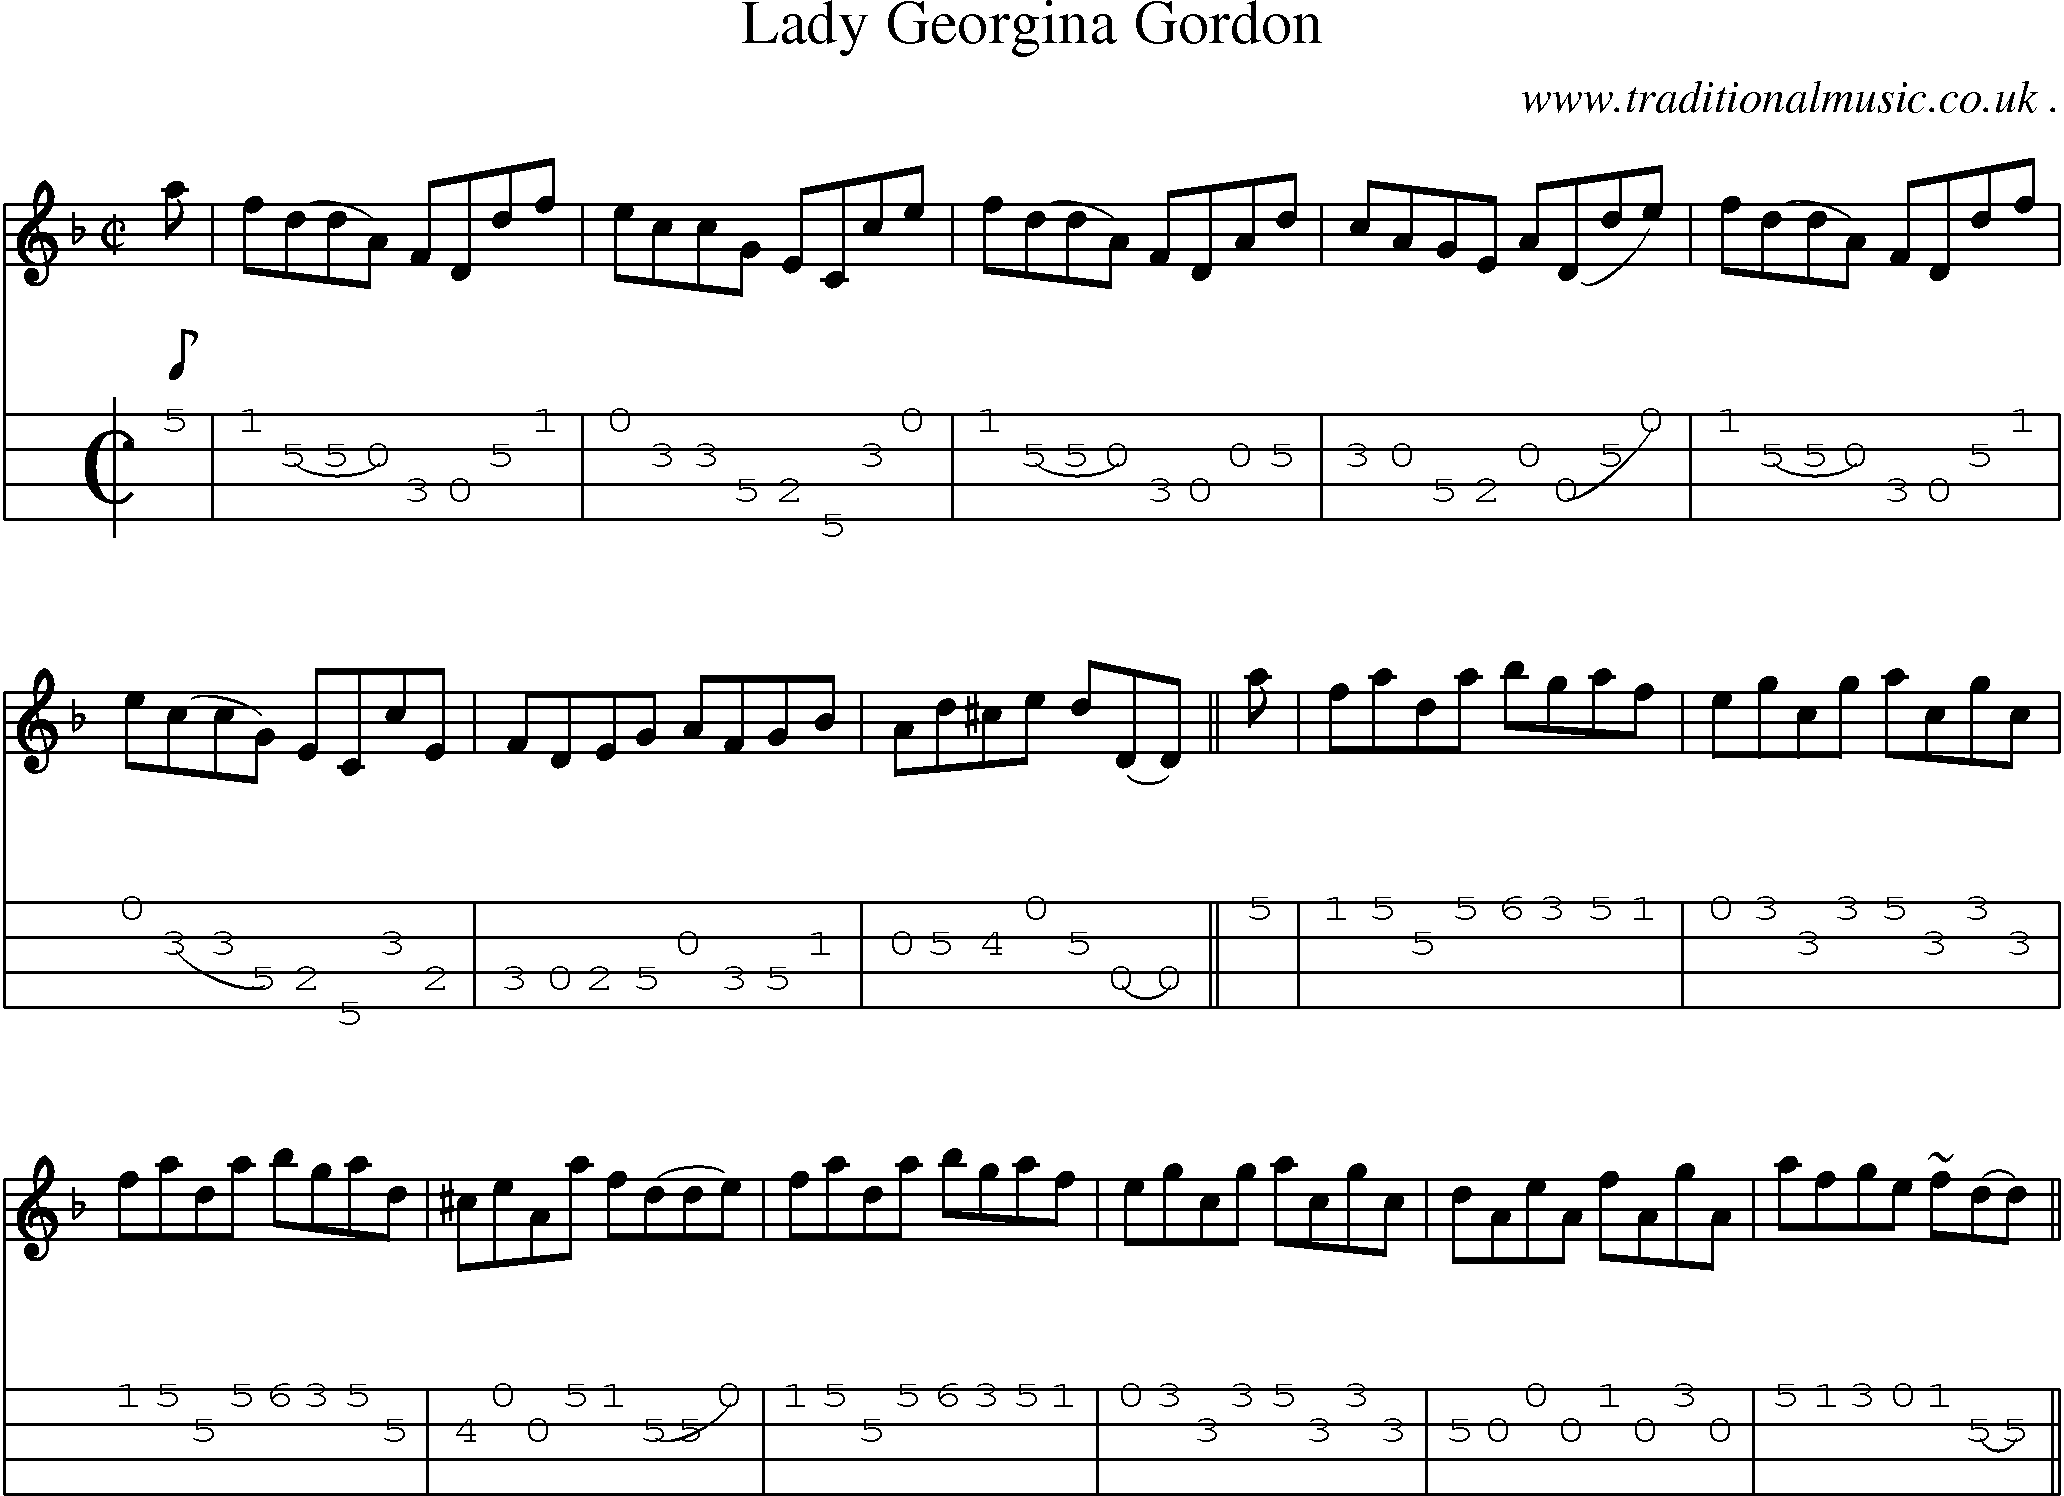 Sheet-music  score, Chords and Mandolin Tabs for Lady Georgina Gordon